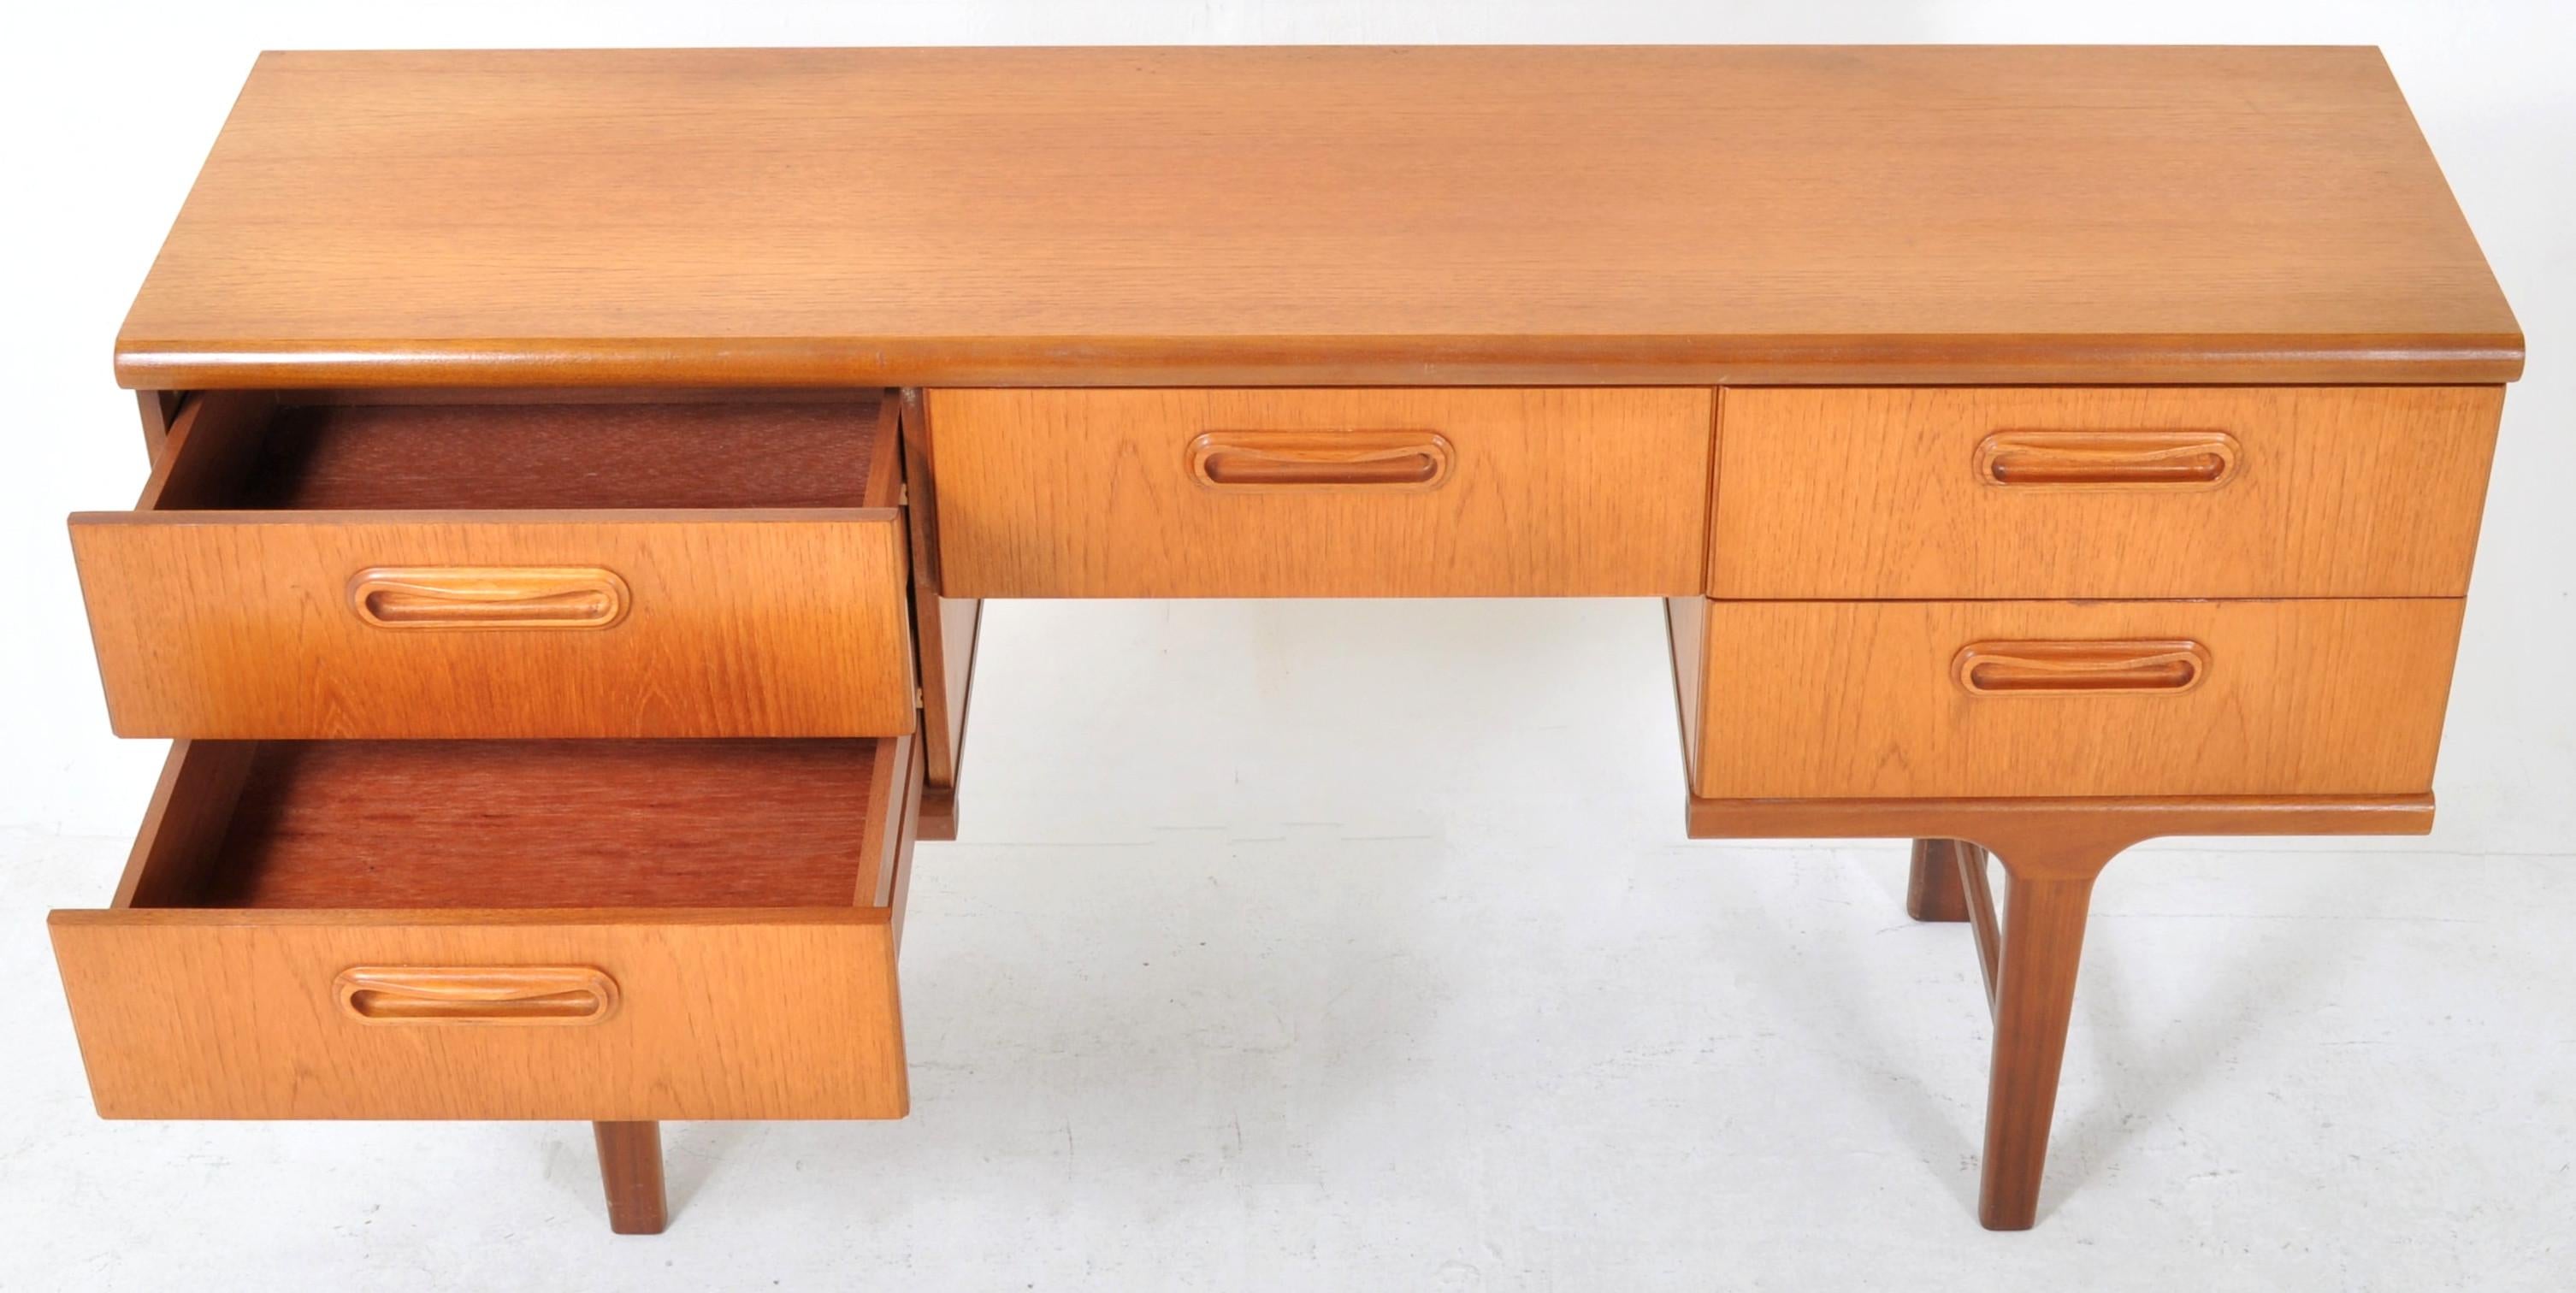 English Mid-Century Modern Danish Style Teak Desk, 1960s